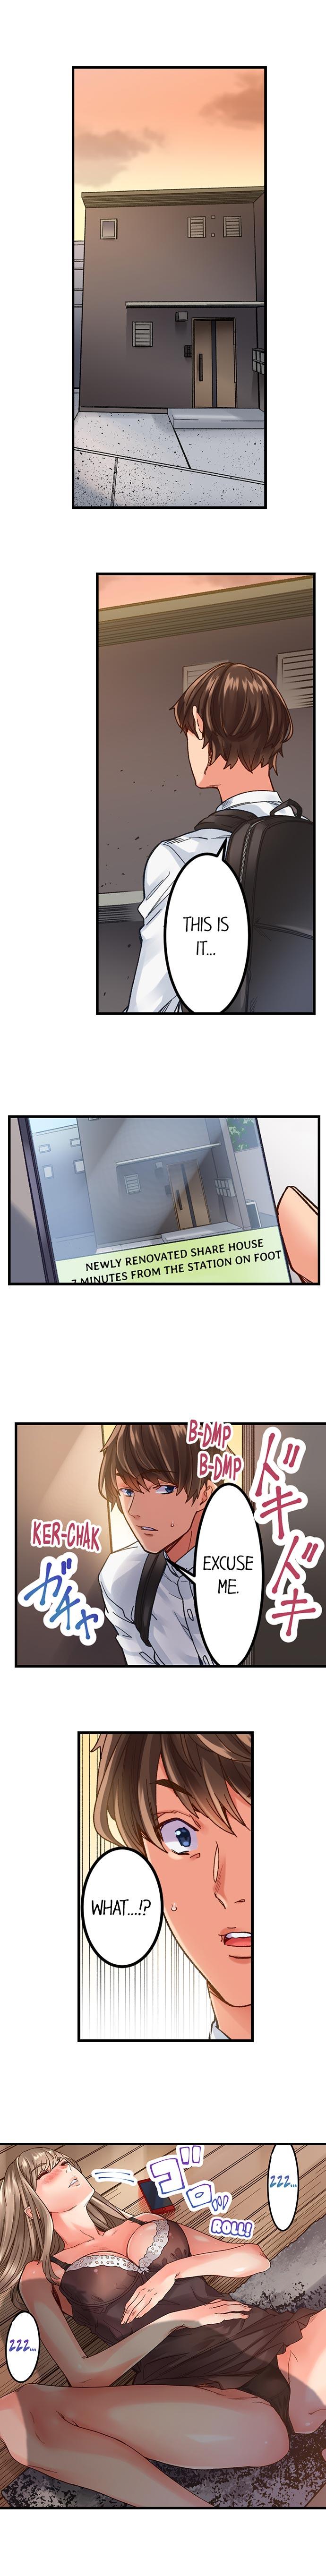 The Share House’s Secret Rule 2